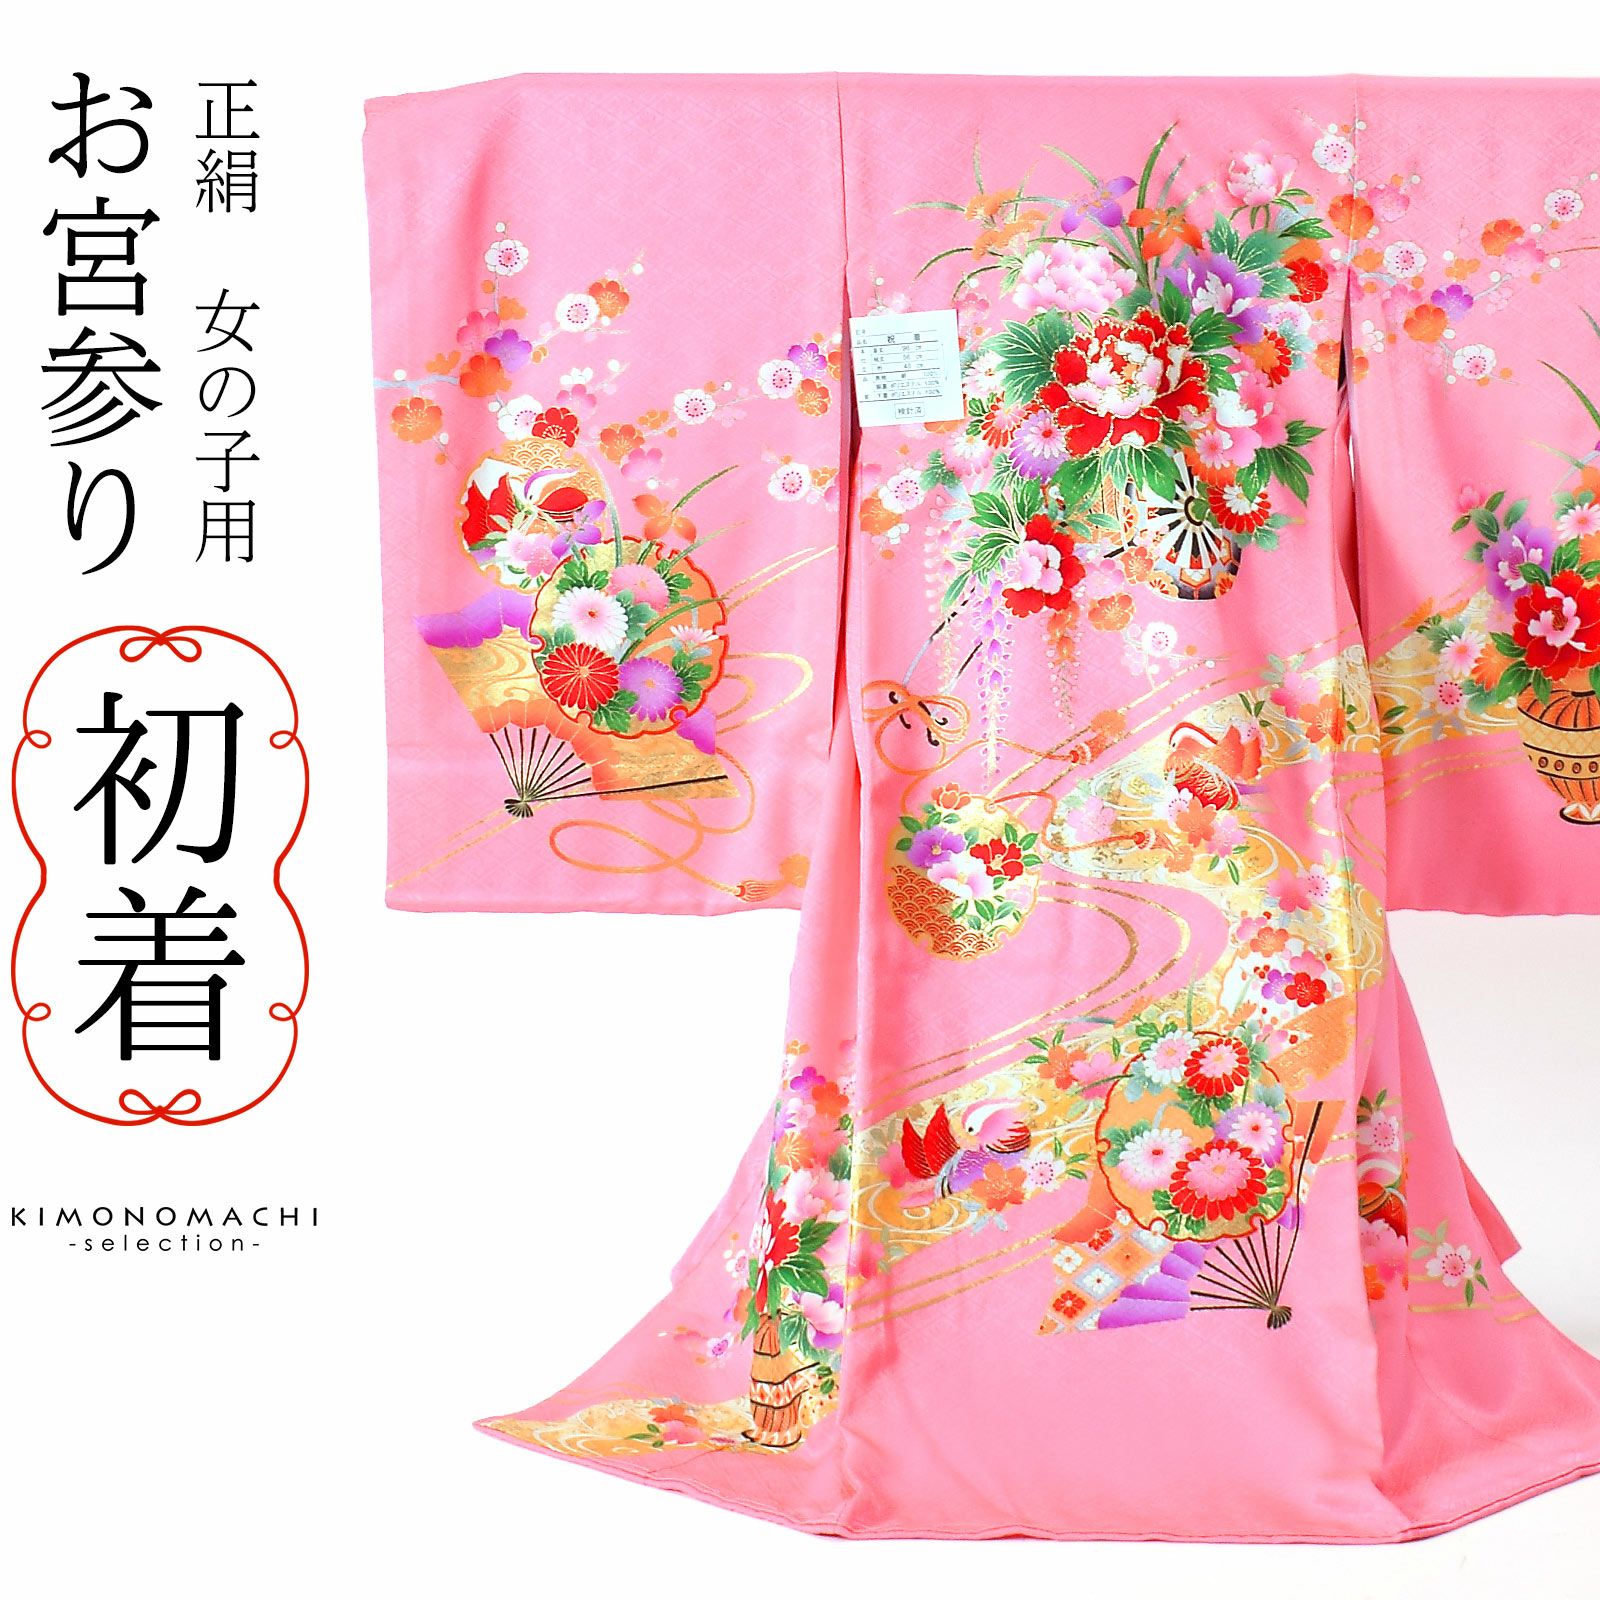 一お宮参り産着、高級絵柄正絹お祝着 女児着物 、 長襦袢付(日本製)